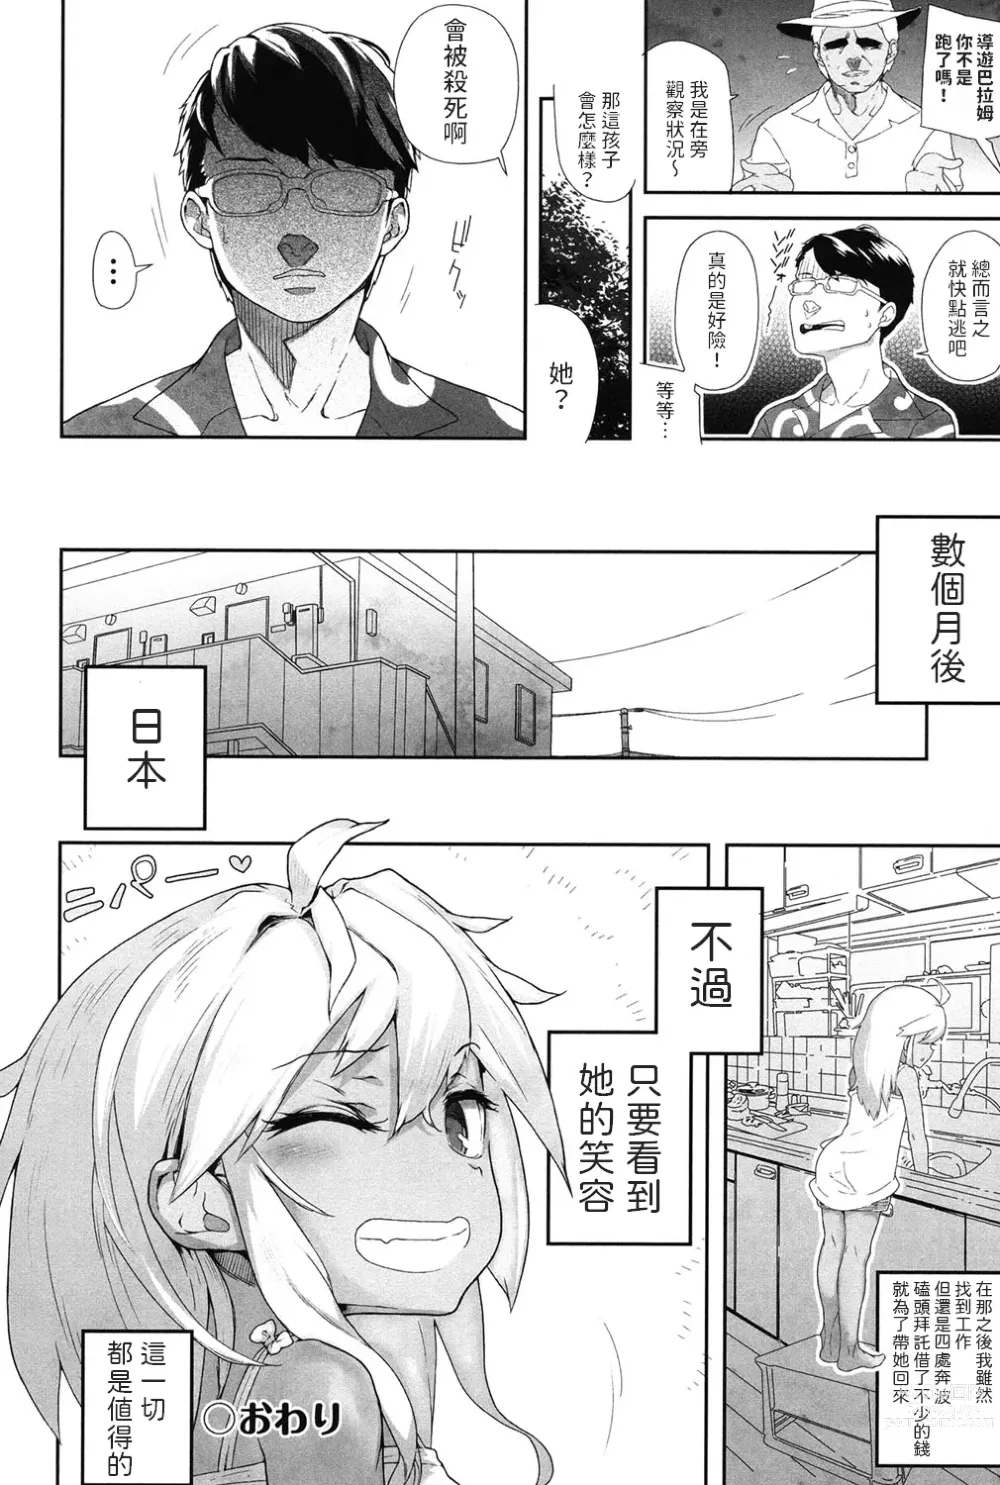 Page 24 of manga Tasatsu Tour